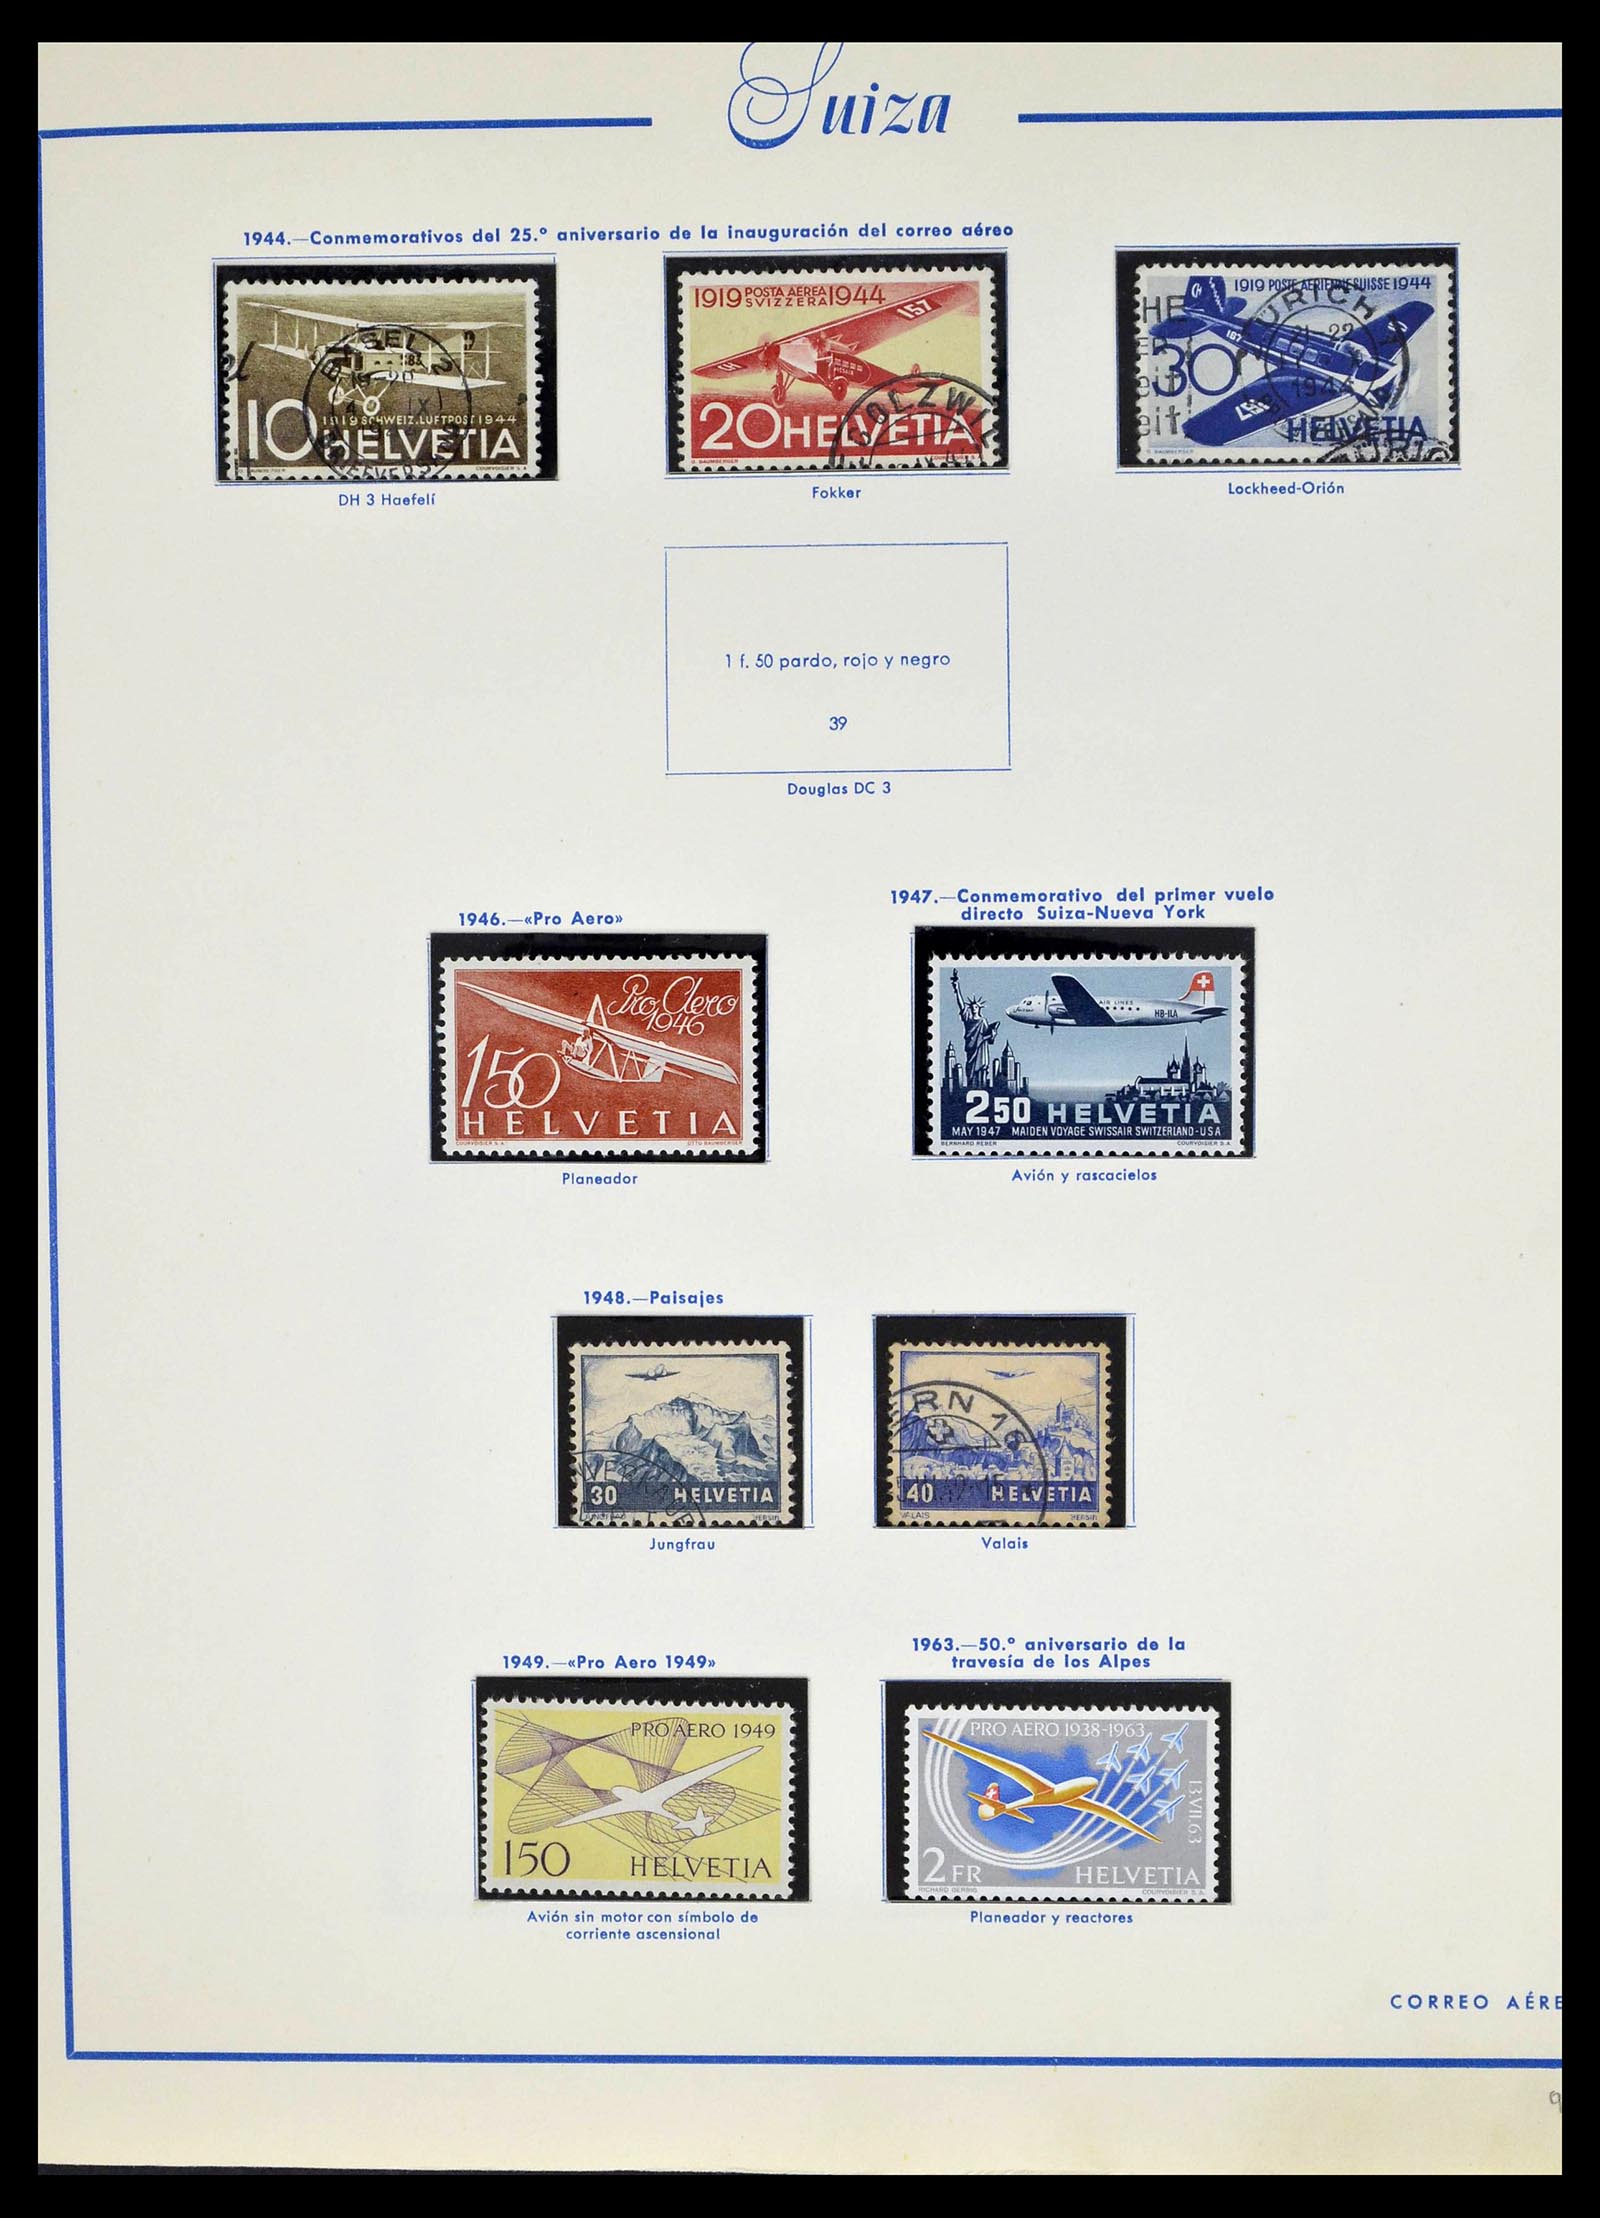 39217 0089 - Stamp collection 39217 Switzerland 1850-1986.